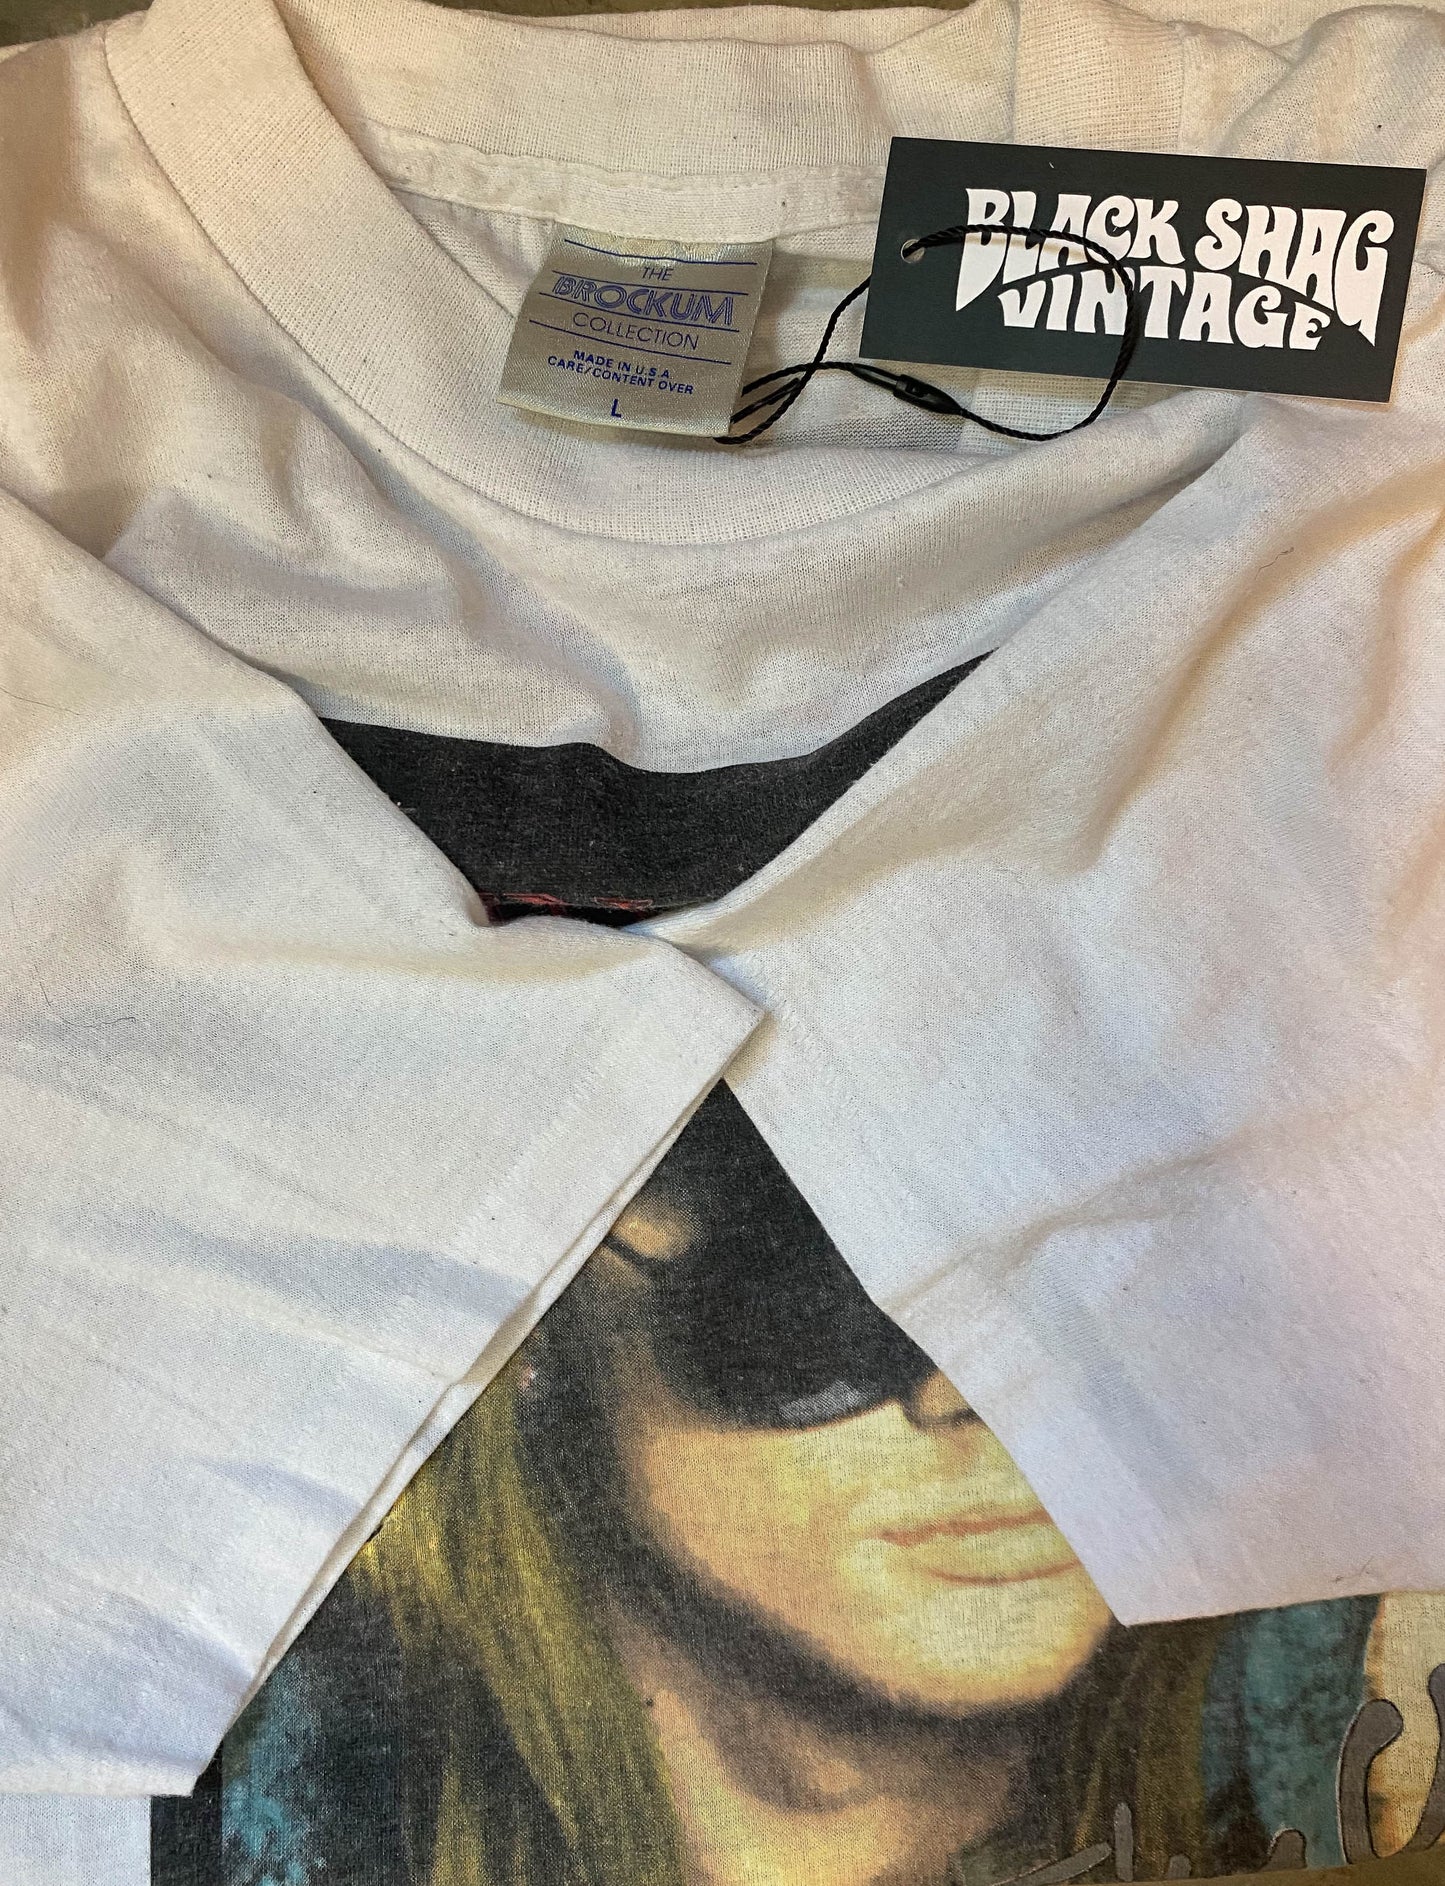 Vintage Guns 'N' Roses One In A Million Lies Concert T Shirt 1989 White Medium